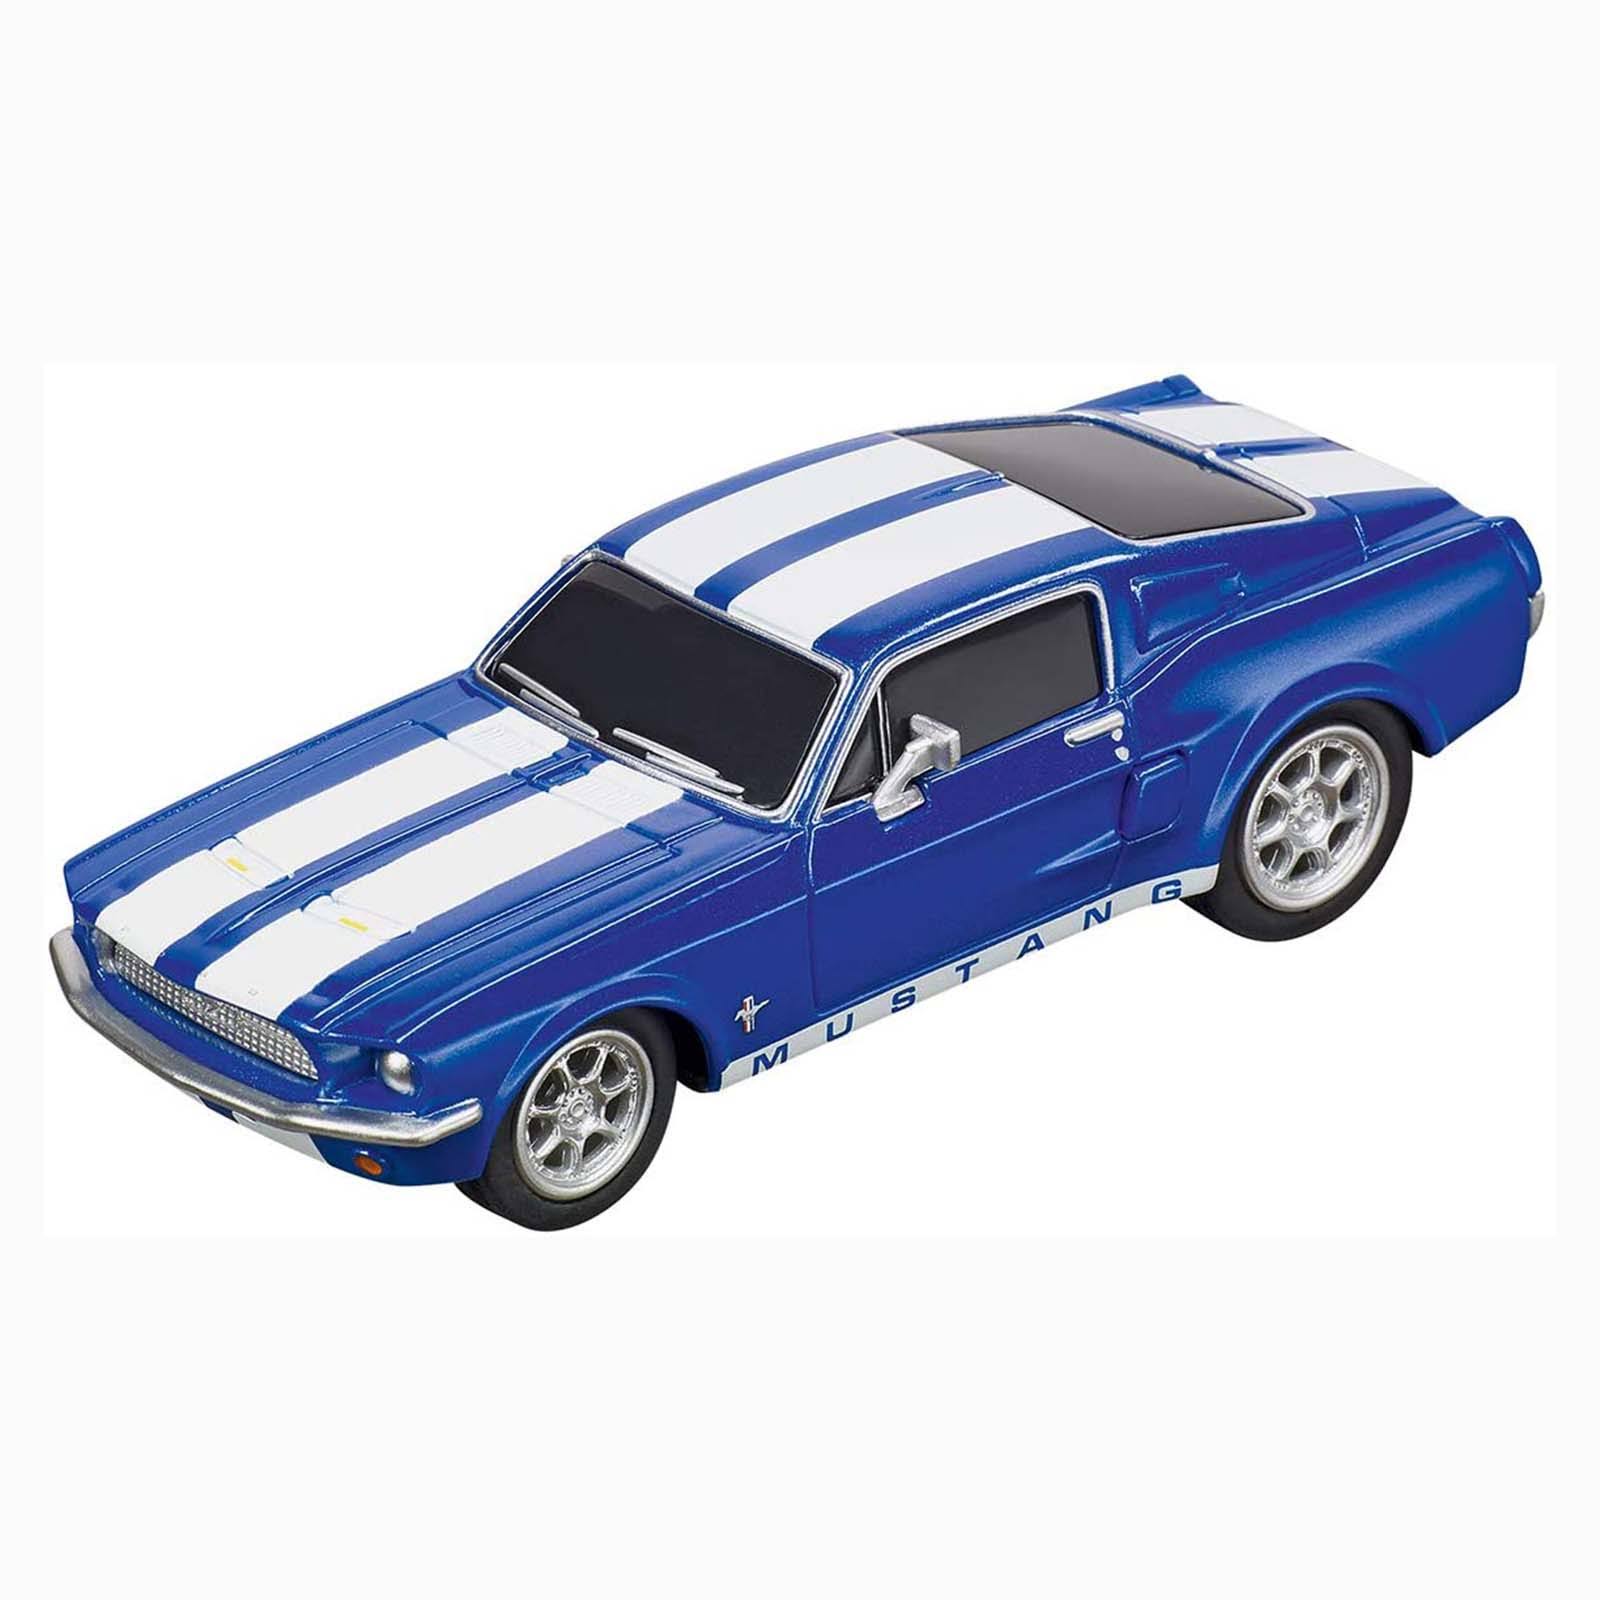 Carrera 64146 Ford Mustang '67 Racing Blue Go!!! Analog Slot Car Racing Vehicle 1:43 Scale